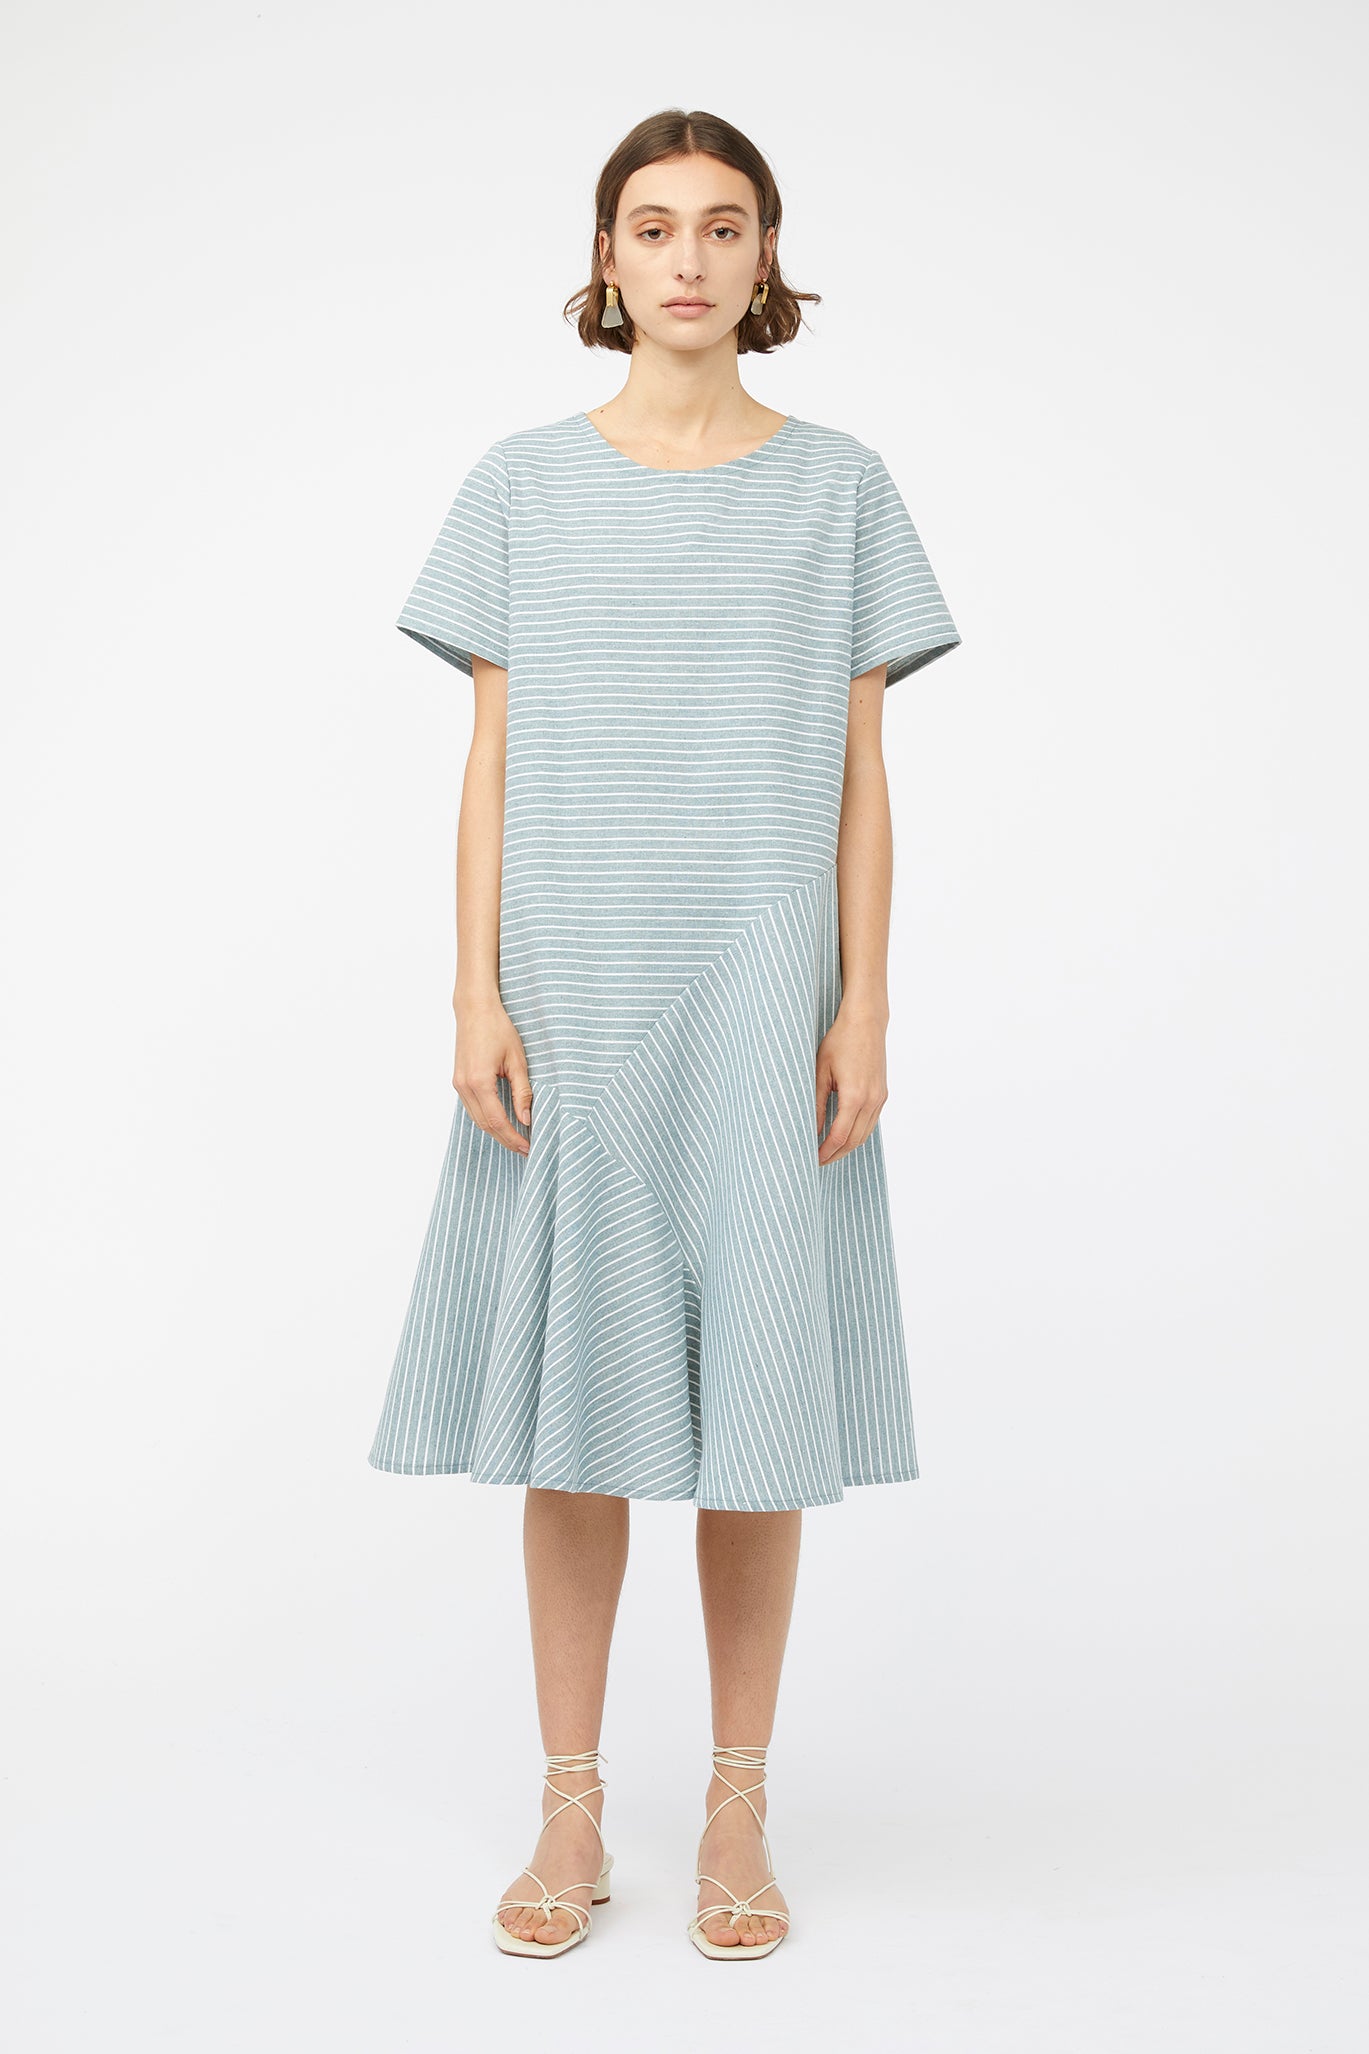 REFRACTION DRESS [ Sage Green & White Stripe Cotton ]